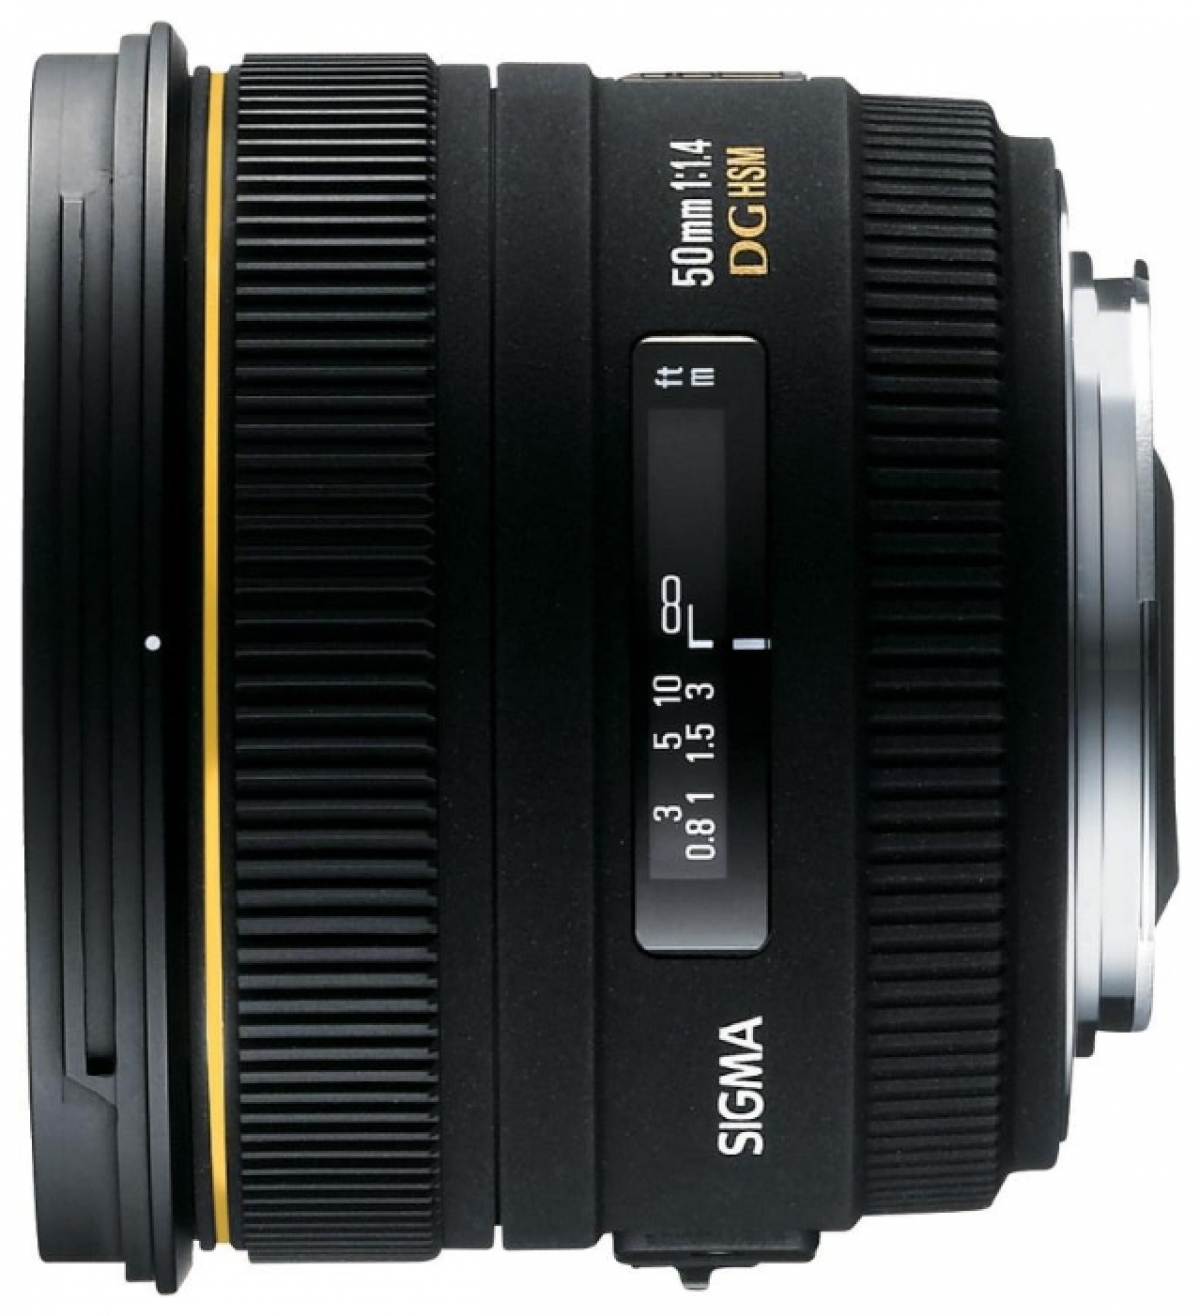 Sigma 50 canon. Sigma 50mm 1.4 Canon. Sigma af 50mm f/1.4 ex. Sigma 50mm 1.4 ex DG HSM Canon. Sigma 50mm 1.4 Nikon.